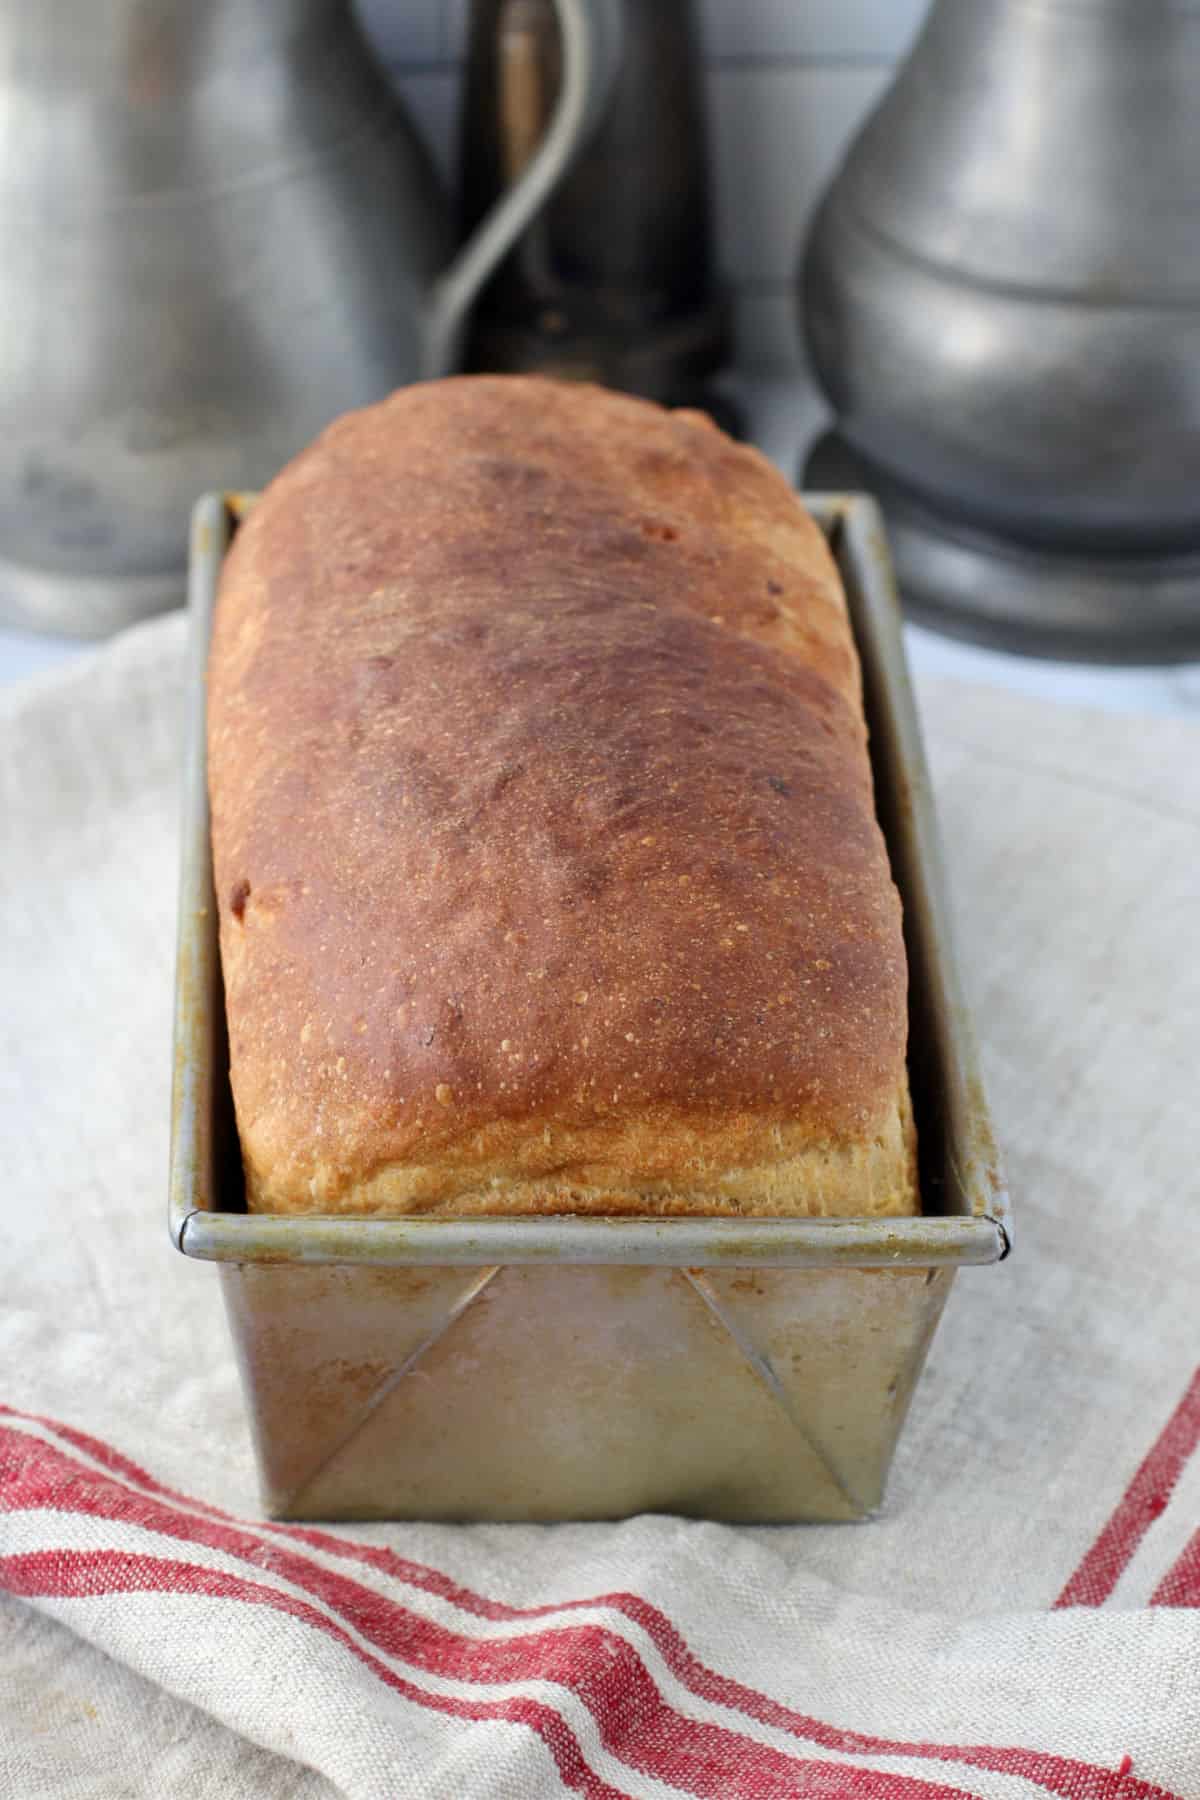 Yeasted Banana Sandwich Bread in a bread pan.